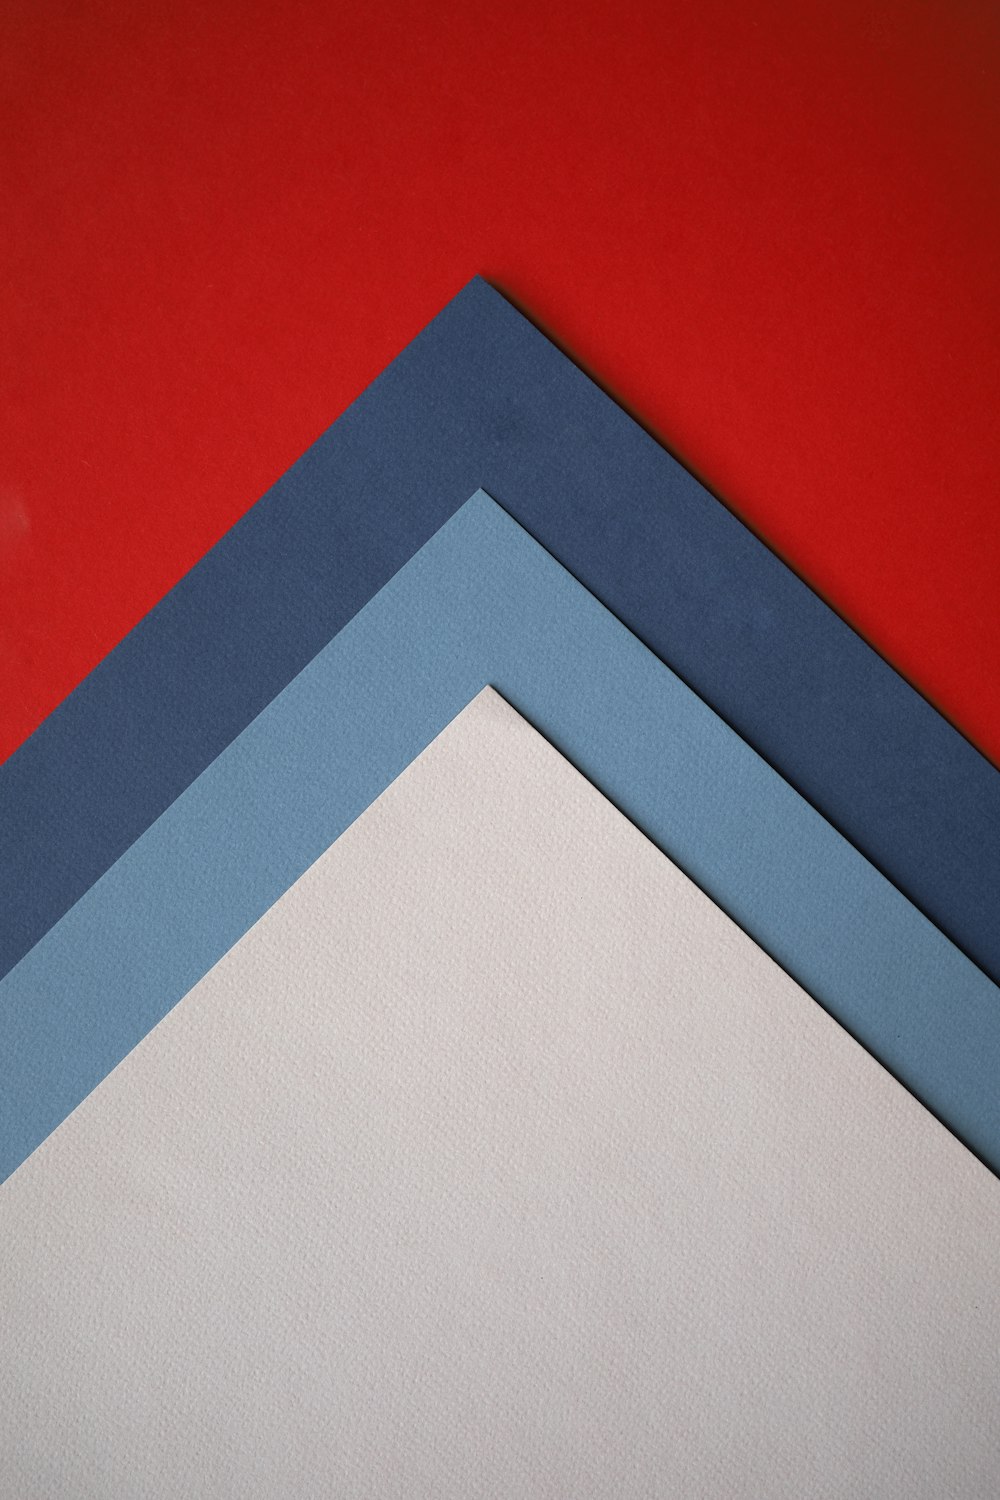 Un primer plano de tres colores diferentes de papel